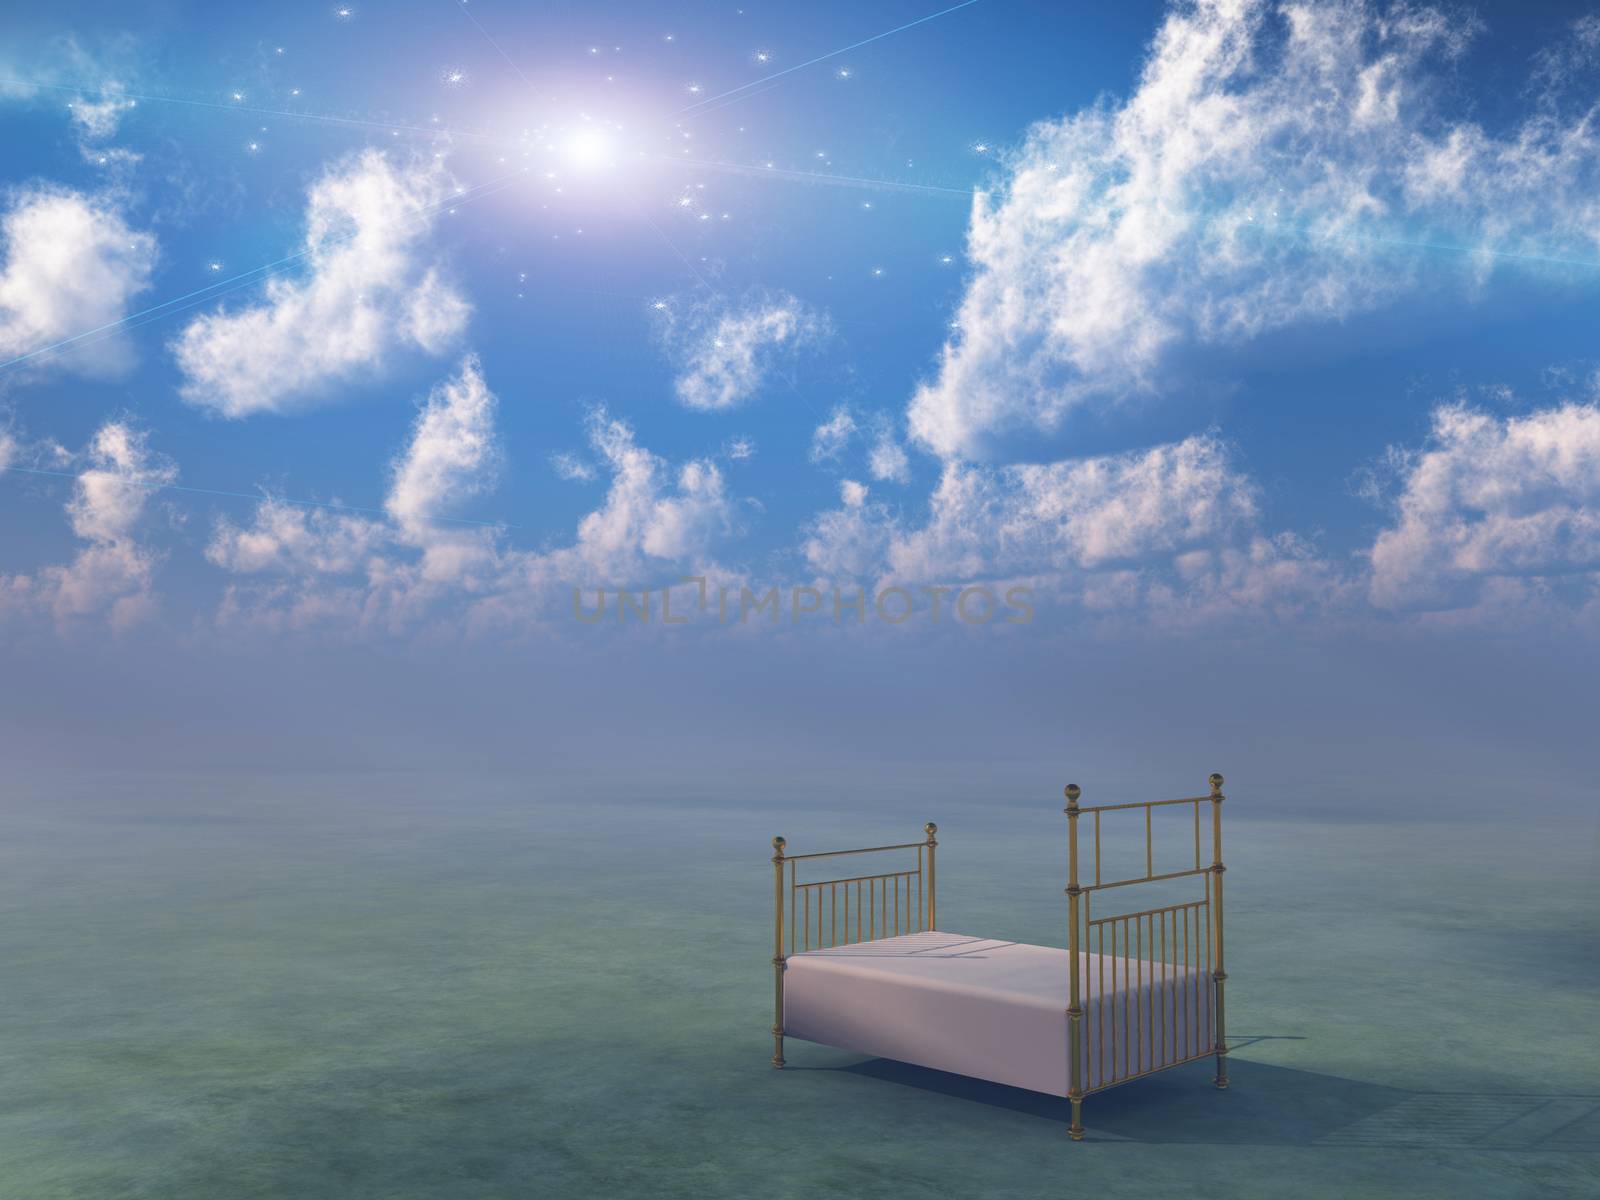 Empty bed in the Heaven sky.